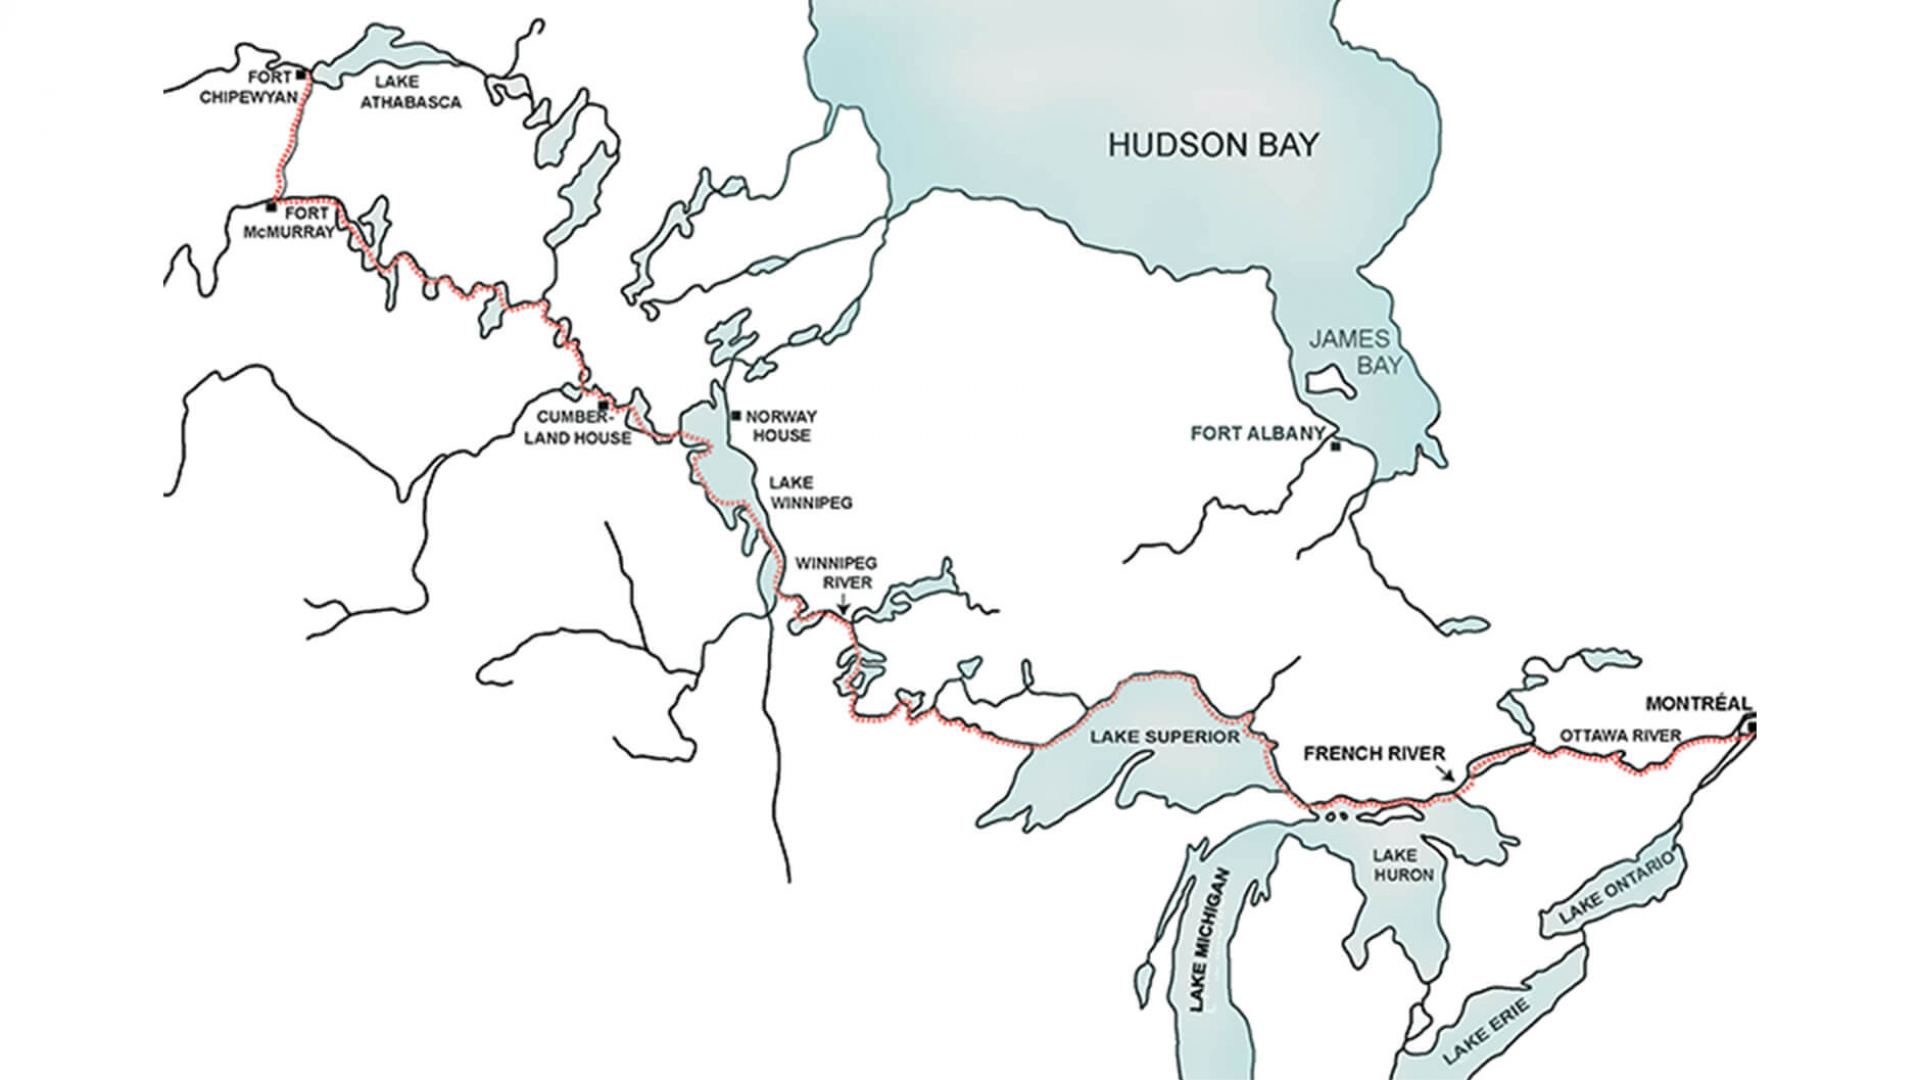 Map of area surrounding Hudson Bay.